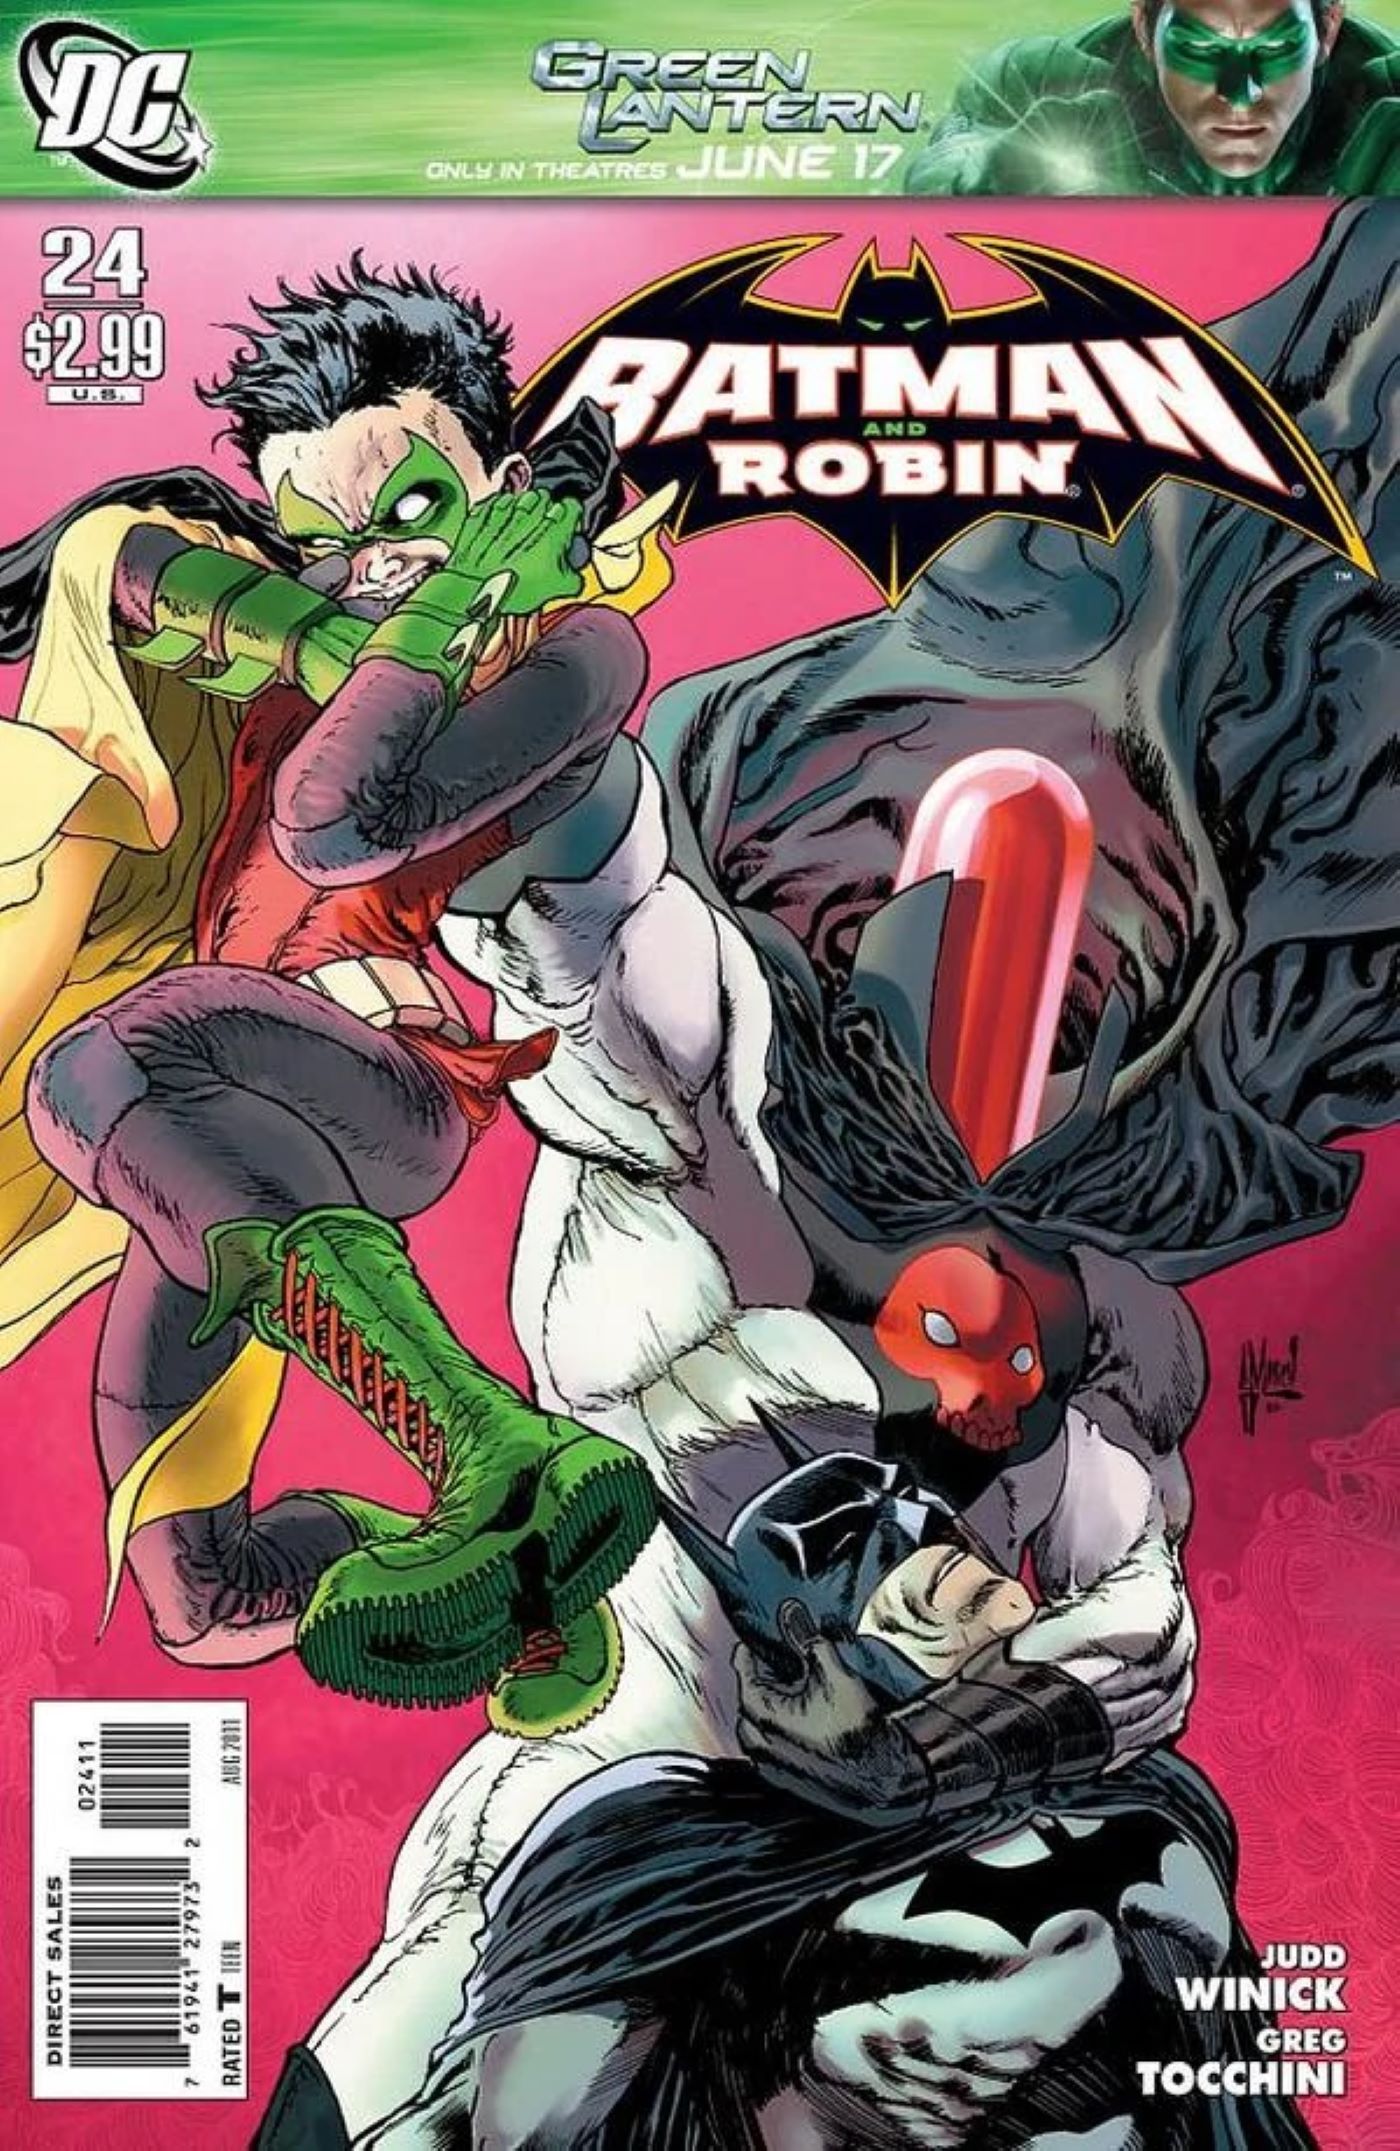 Batman and Robin #24 cover featuring Red Hood choking Damian Wayne